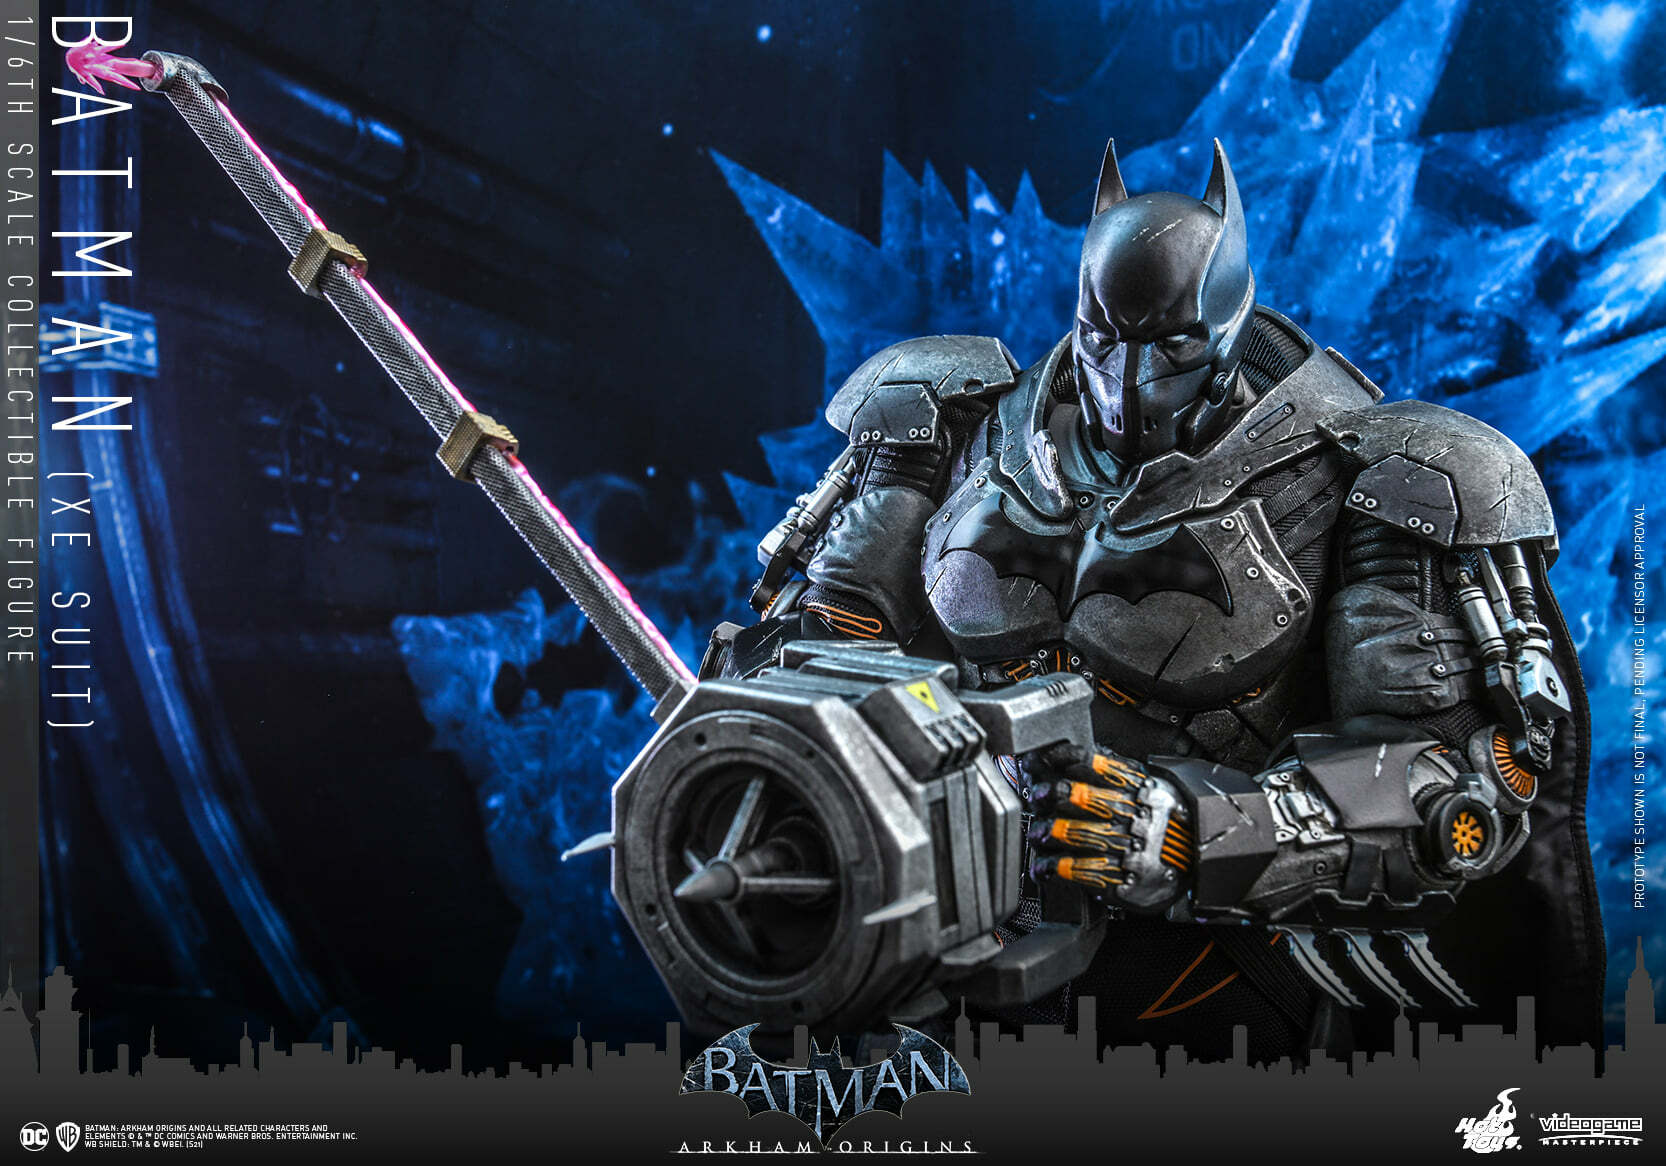 Batman's Arkham Origins XE Suit Gets A $375 Hot Toys Figure - GameSpot